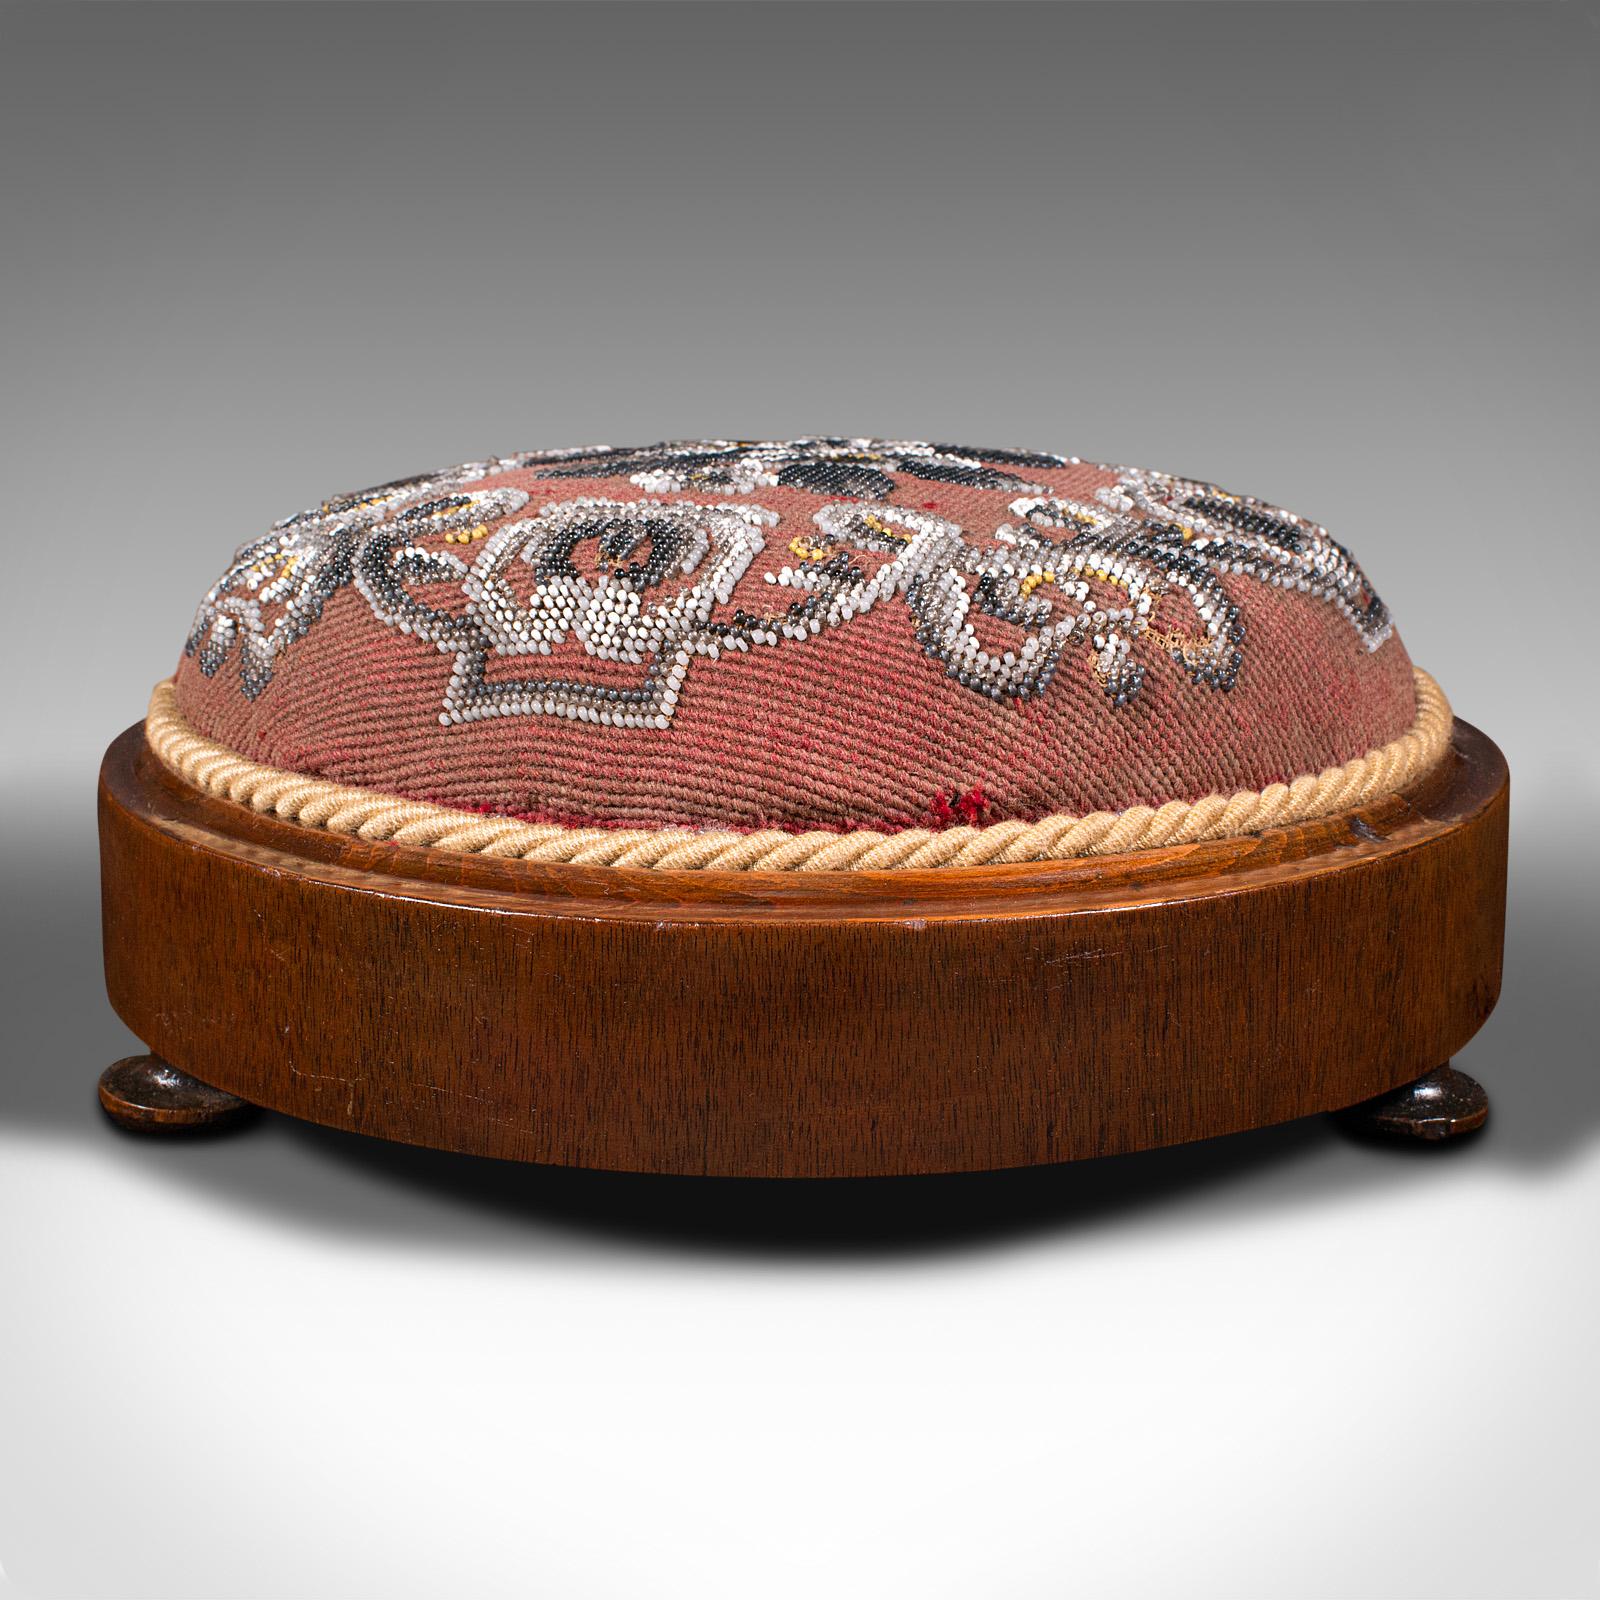 British Pair Of Antique Beadwork Footstools, English, Decorative Rest, Stool, Victorian